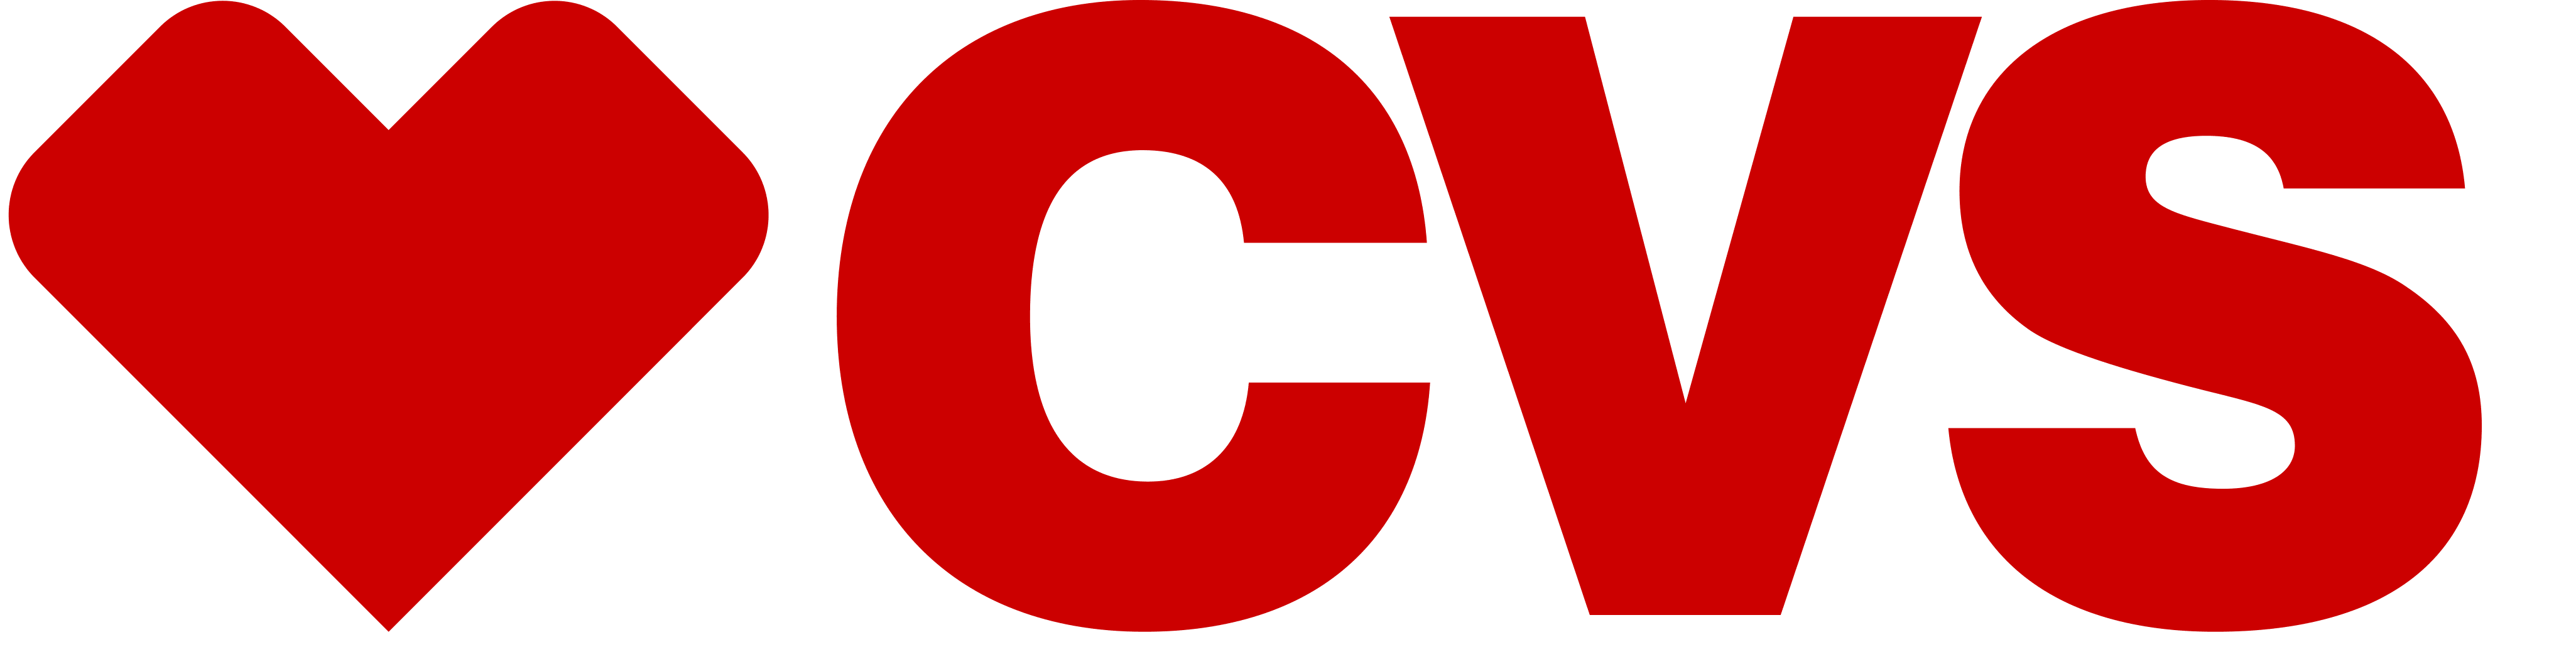 CVS Logo - Cvs Logos